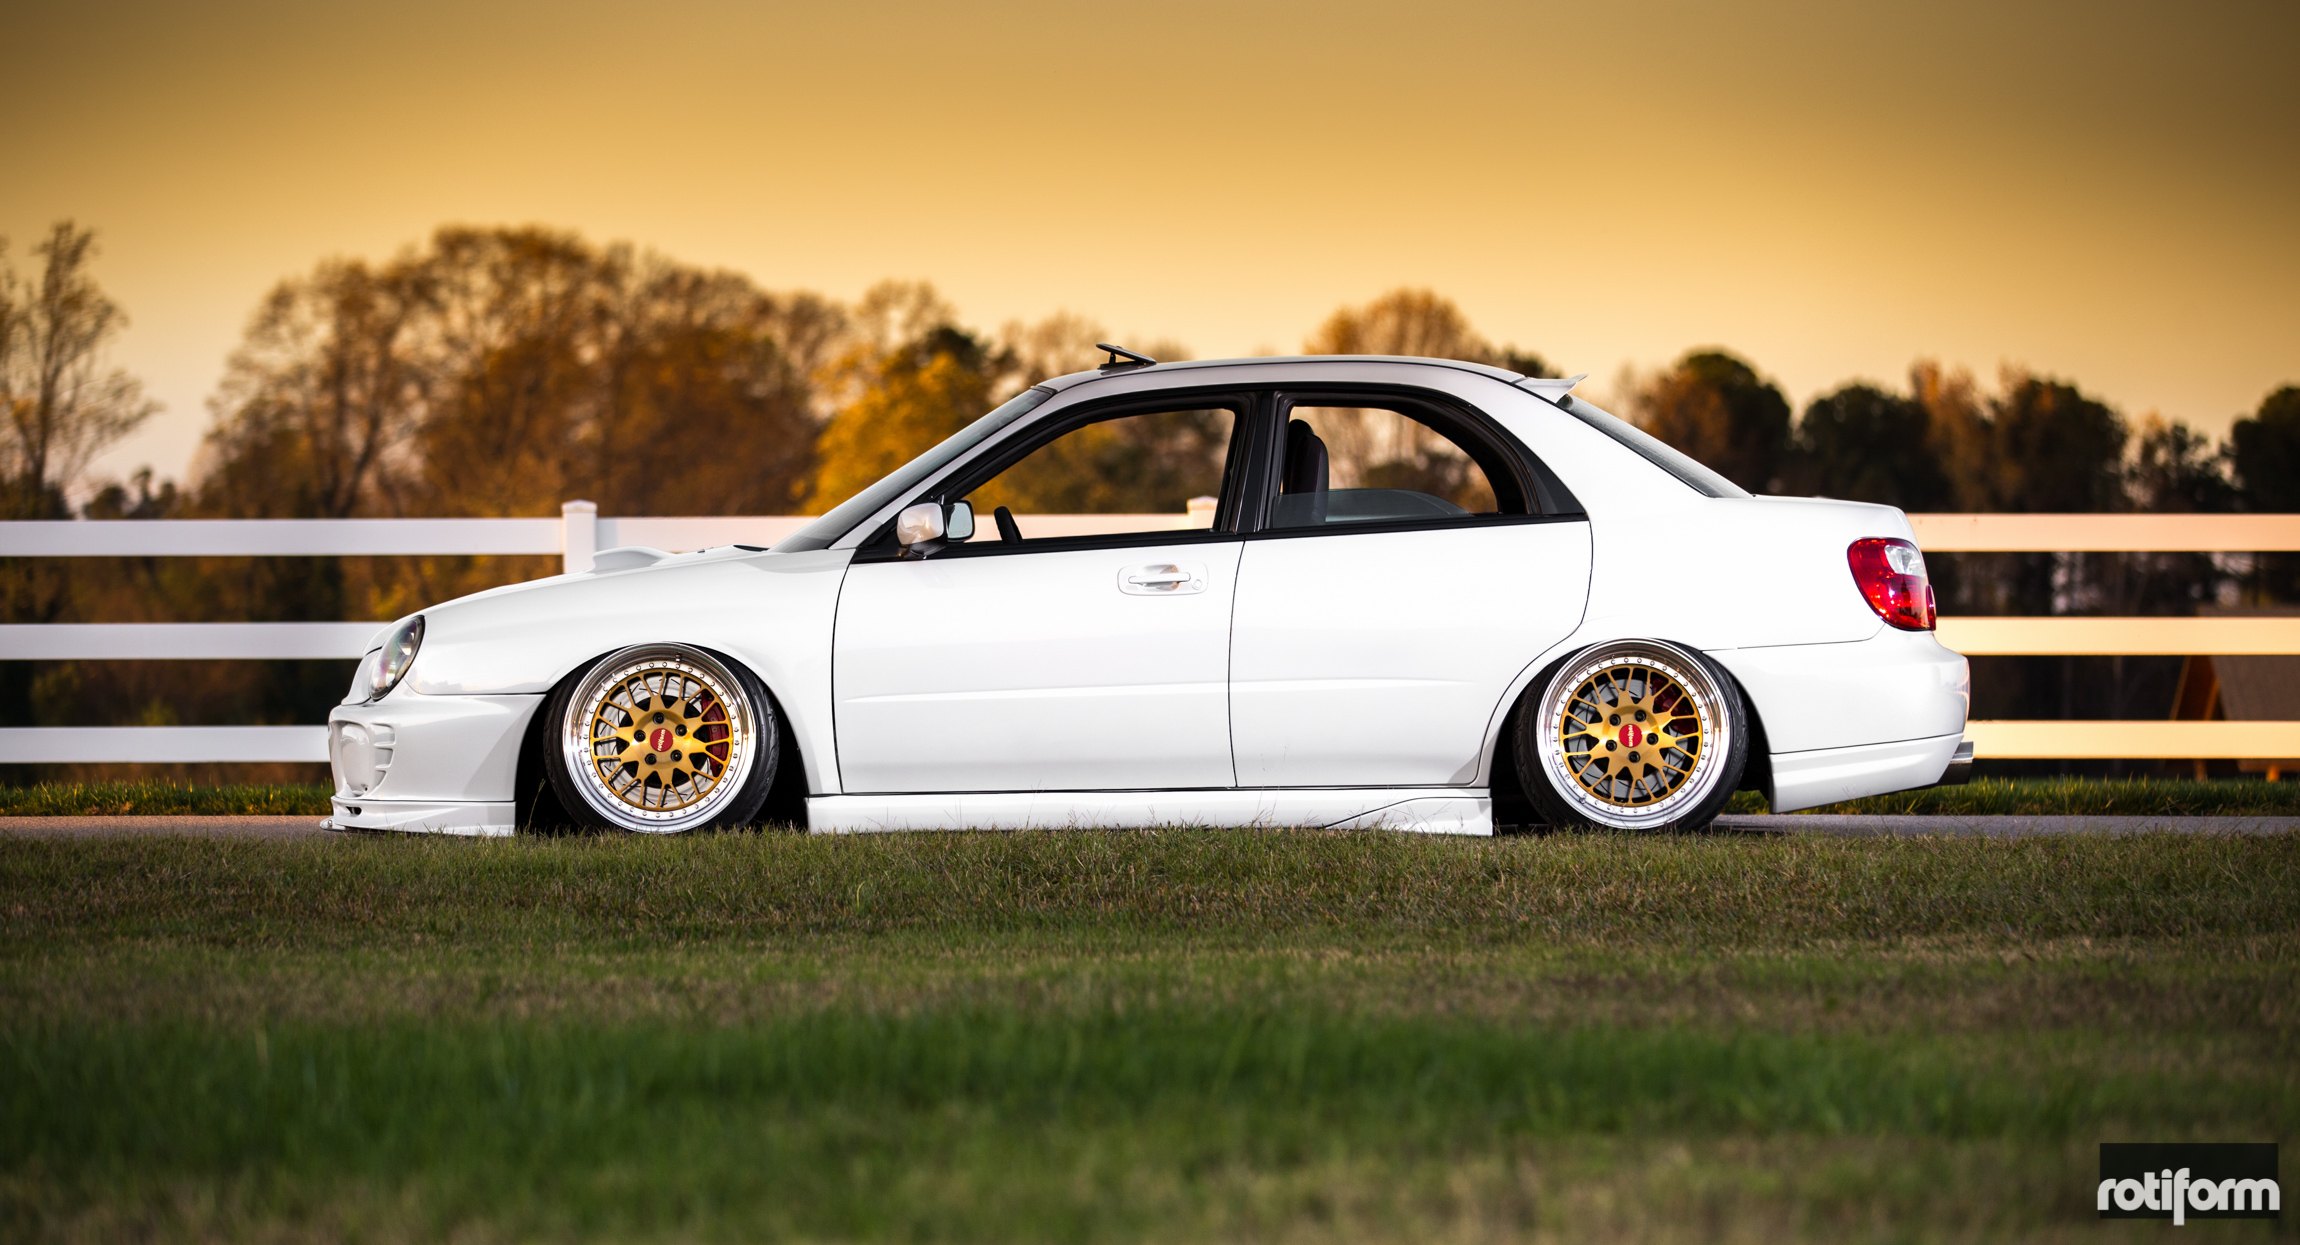 Brushed Candy Gold Rotiform Wheels on White Subaru WRX - Photo by Rotiform